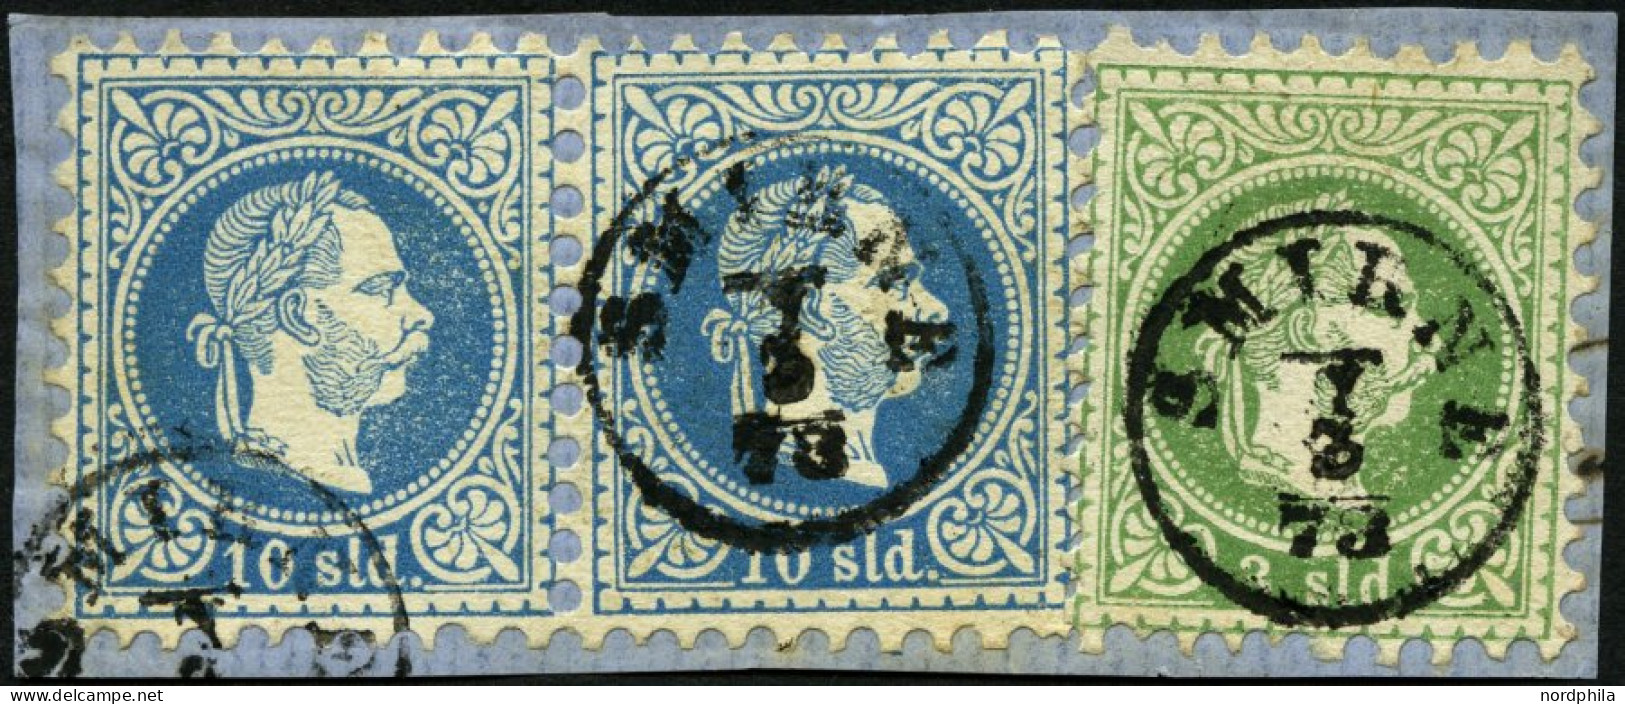 POST IN DER LEVANTE 2Ia,4Ia  Paar BrfStk, 1867, 2 So. Grün Und 10 So. Blau Im Waagerechten Paar, K1 SMIRNE, Dekoratives  - Oostenrijkse Levant